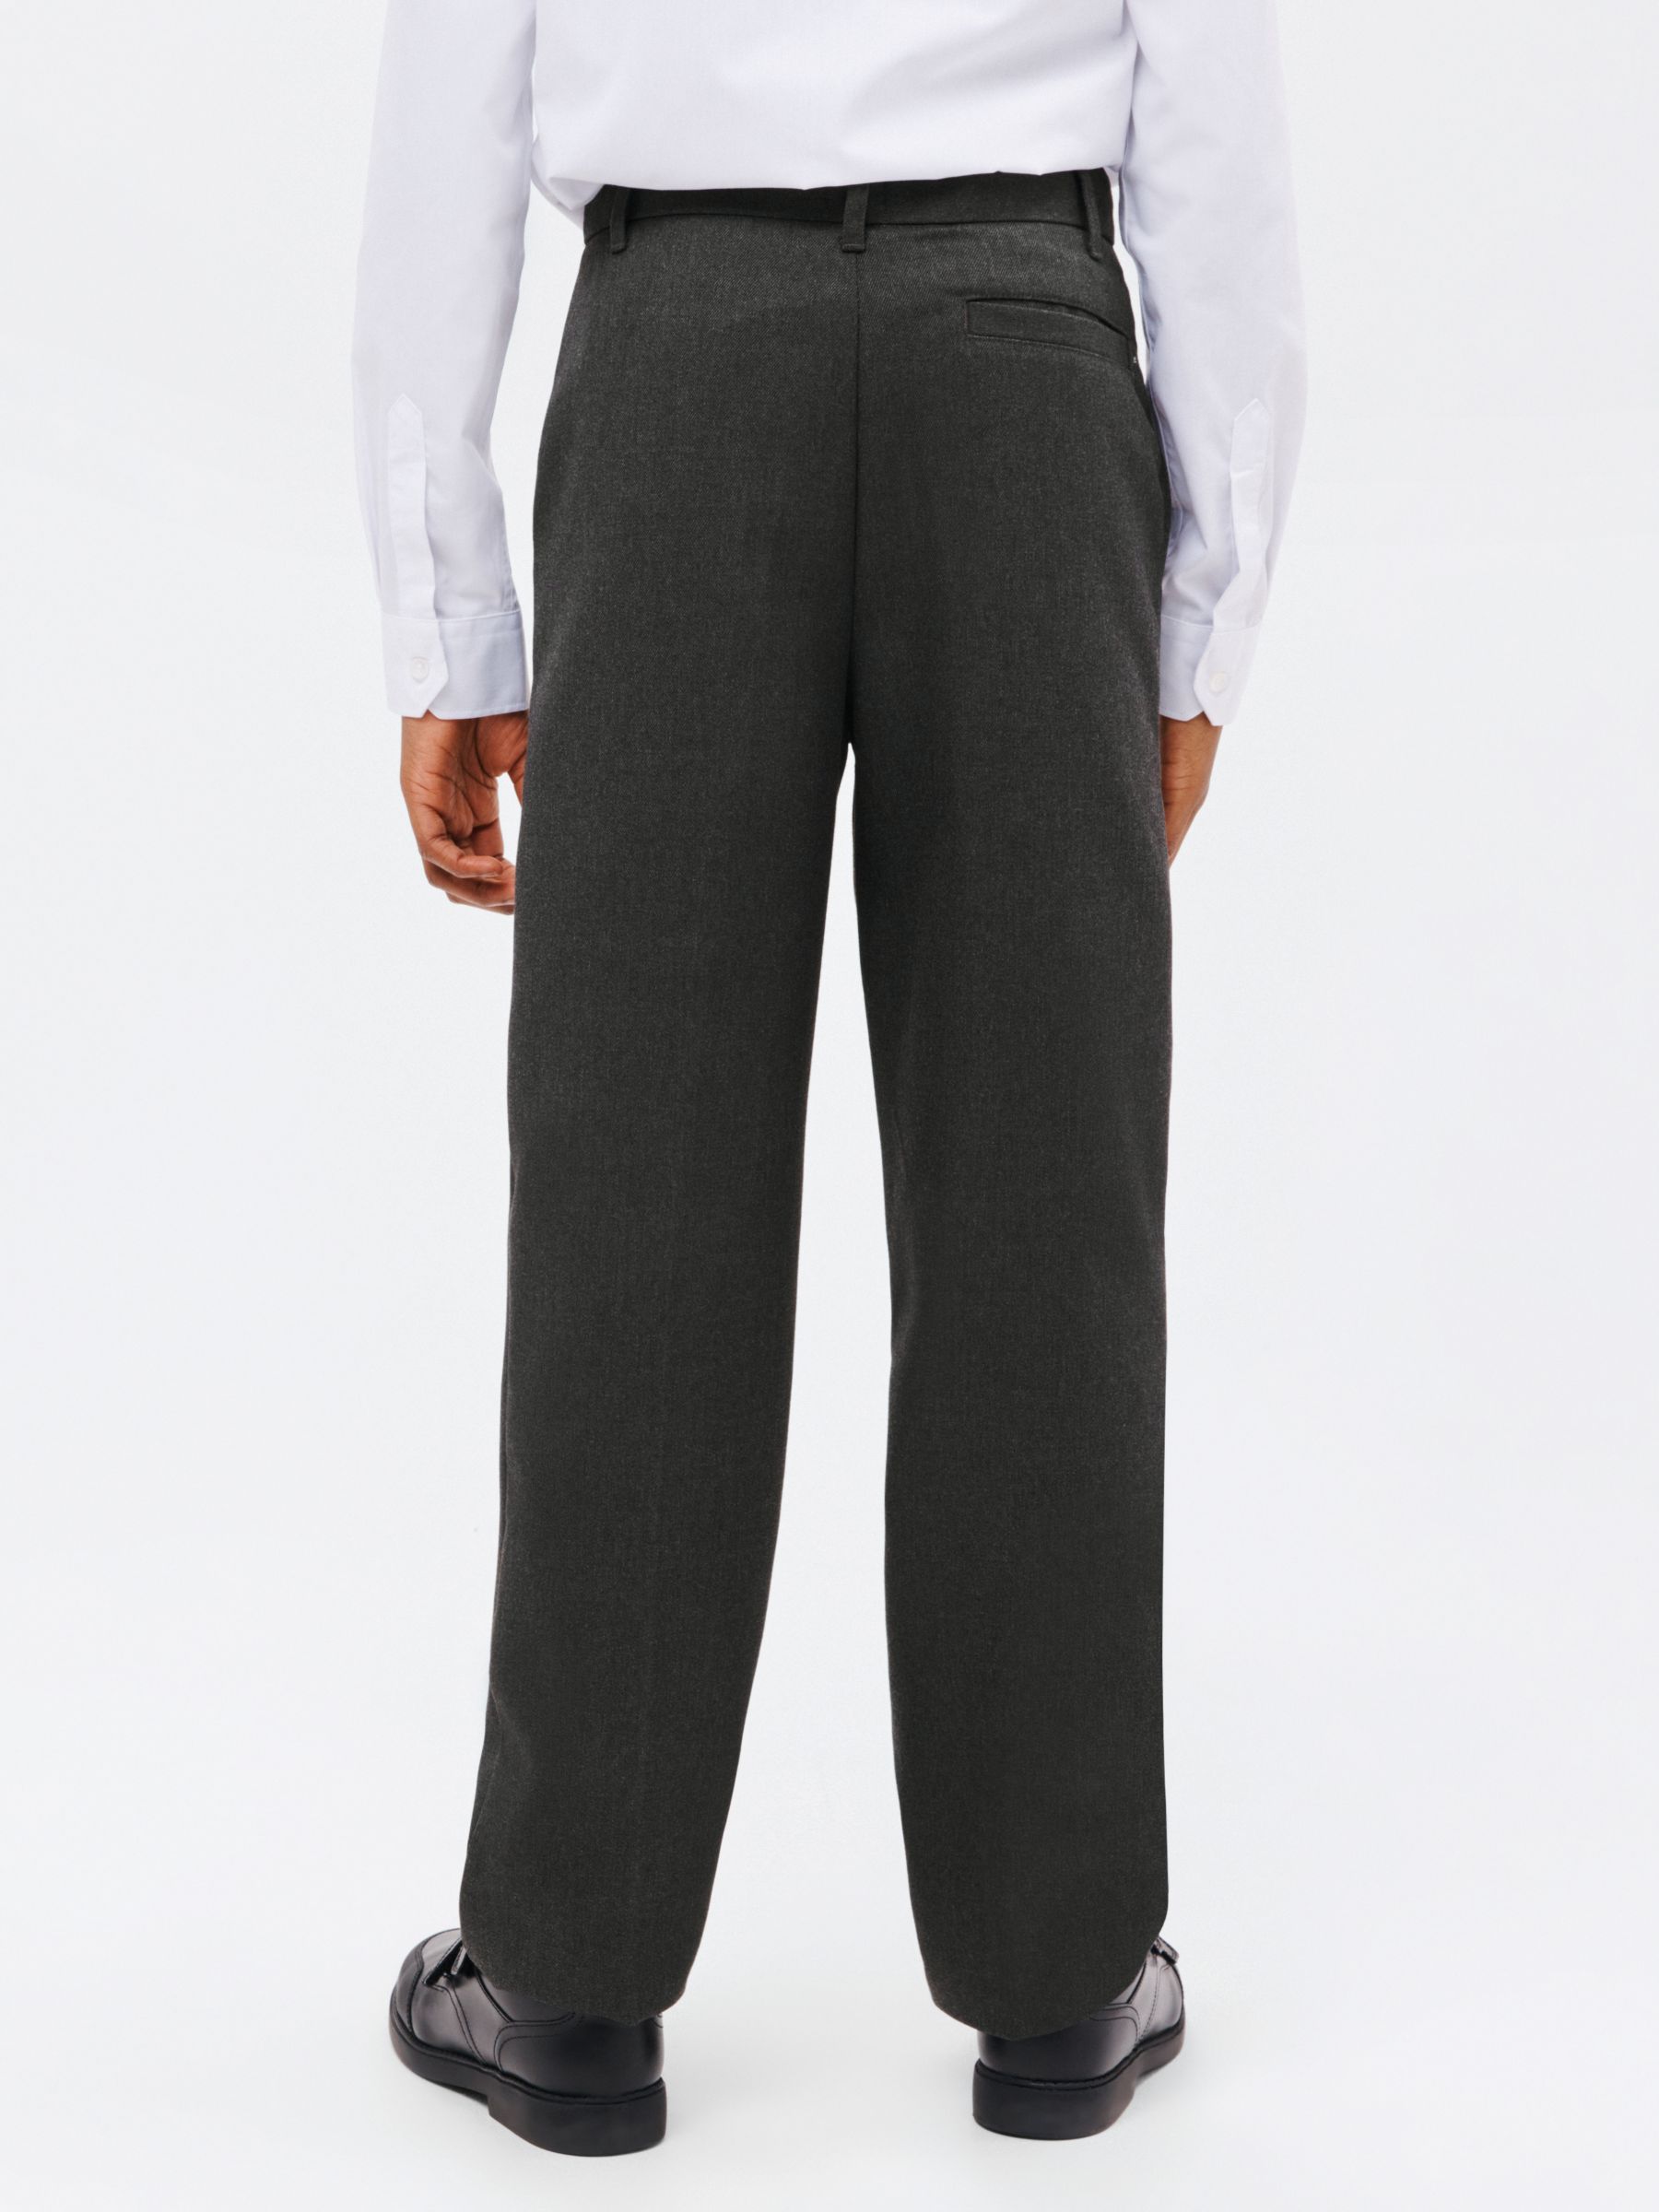 John Lewis Kids' Regular Fit Long Length School Trousers, Grey, 8 years